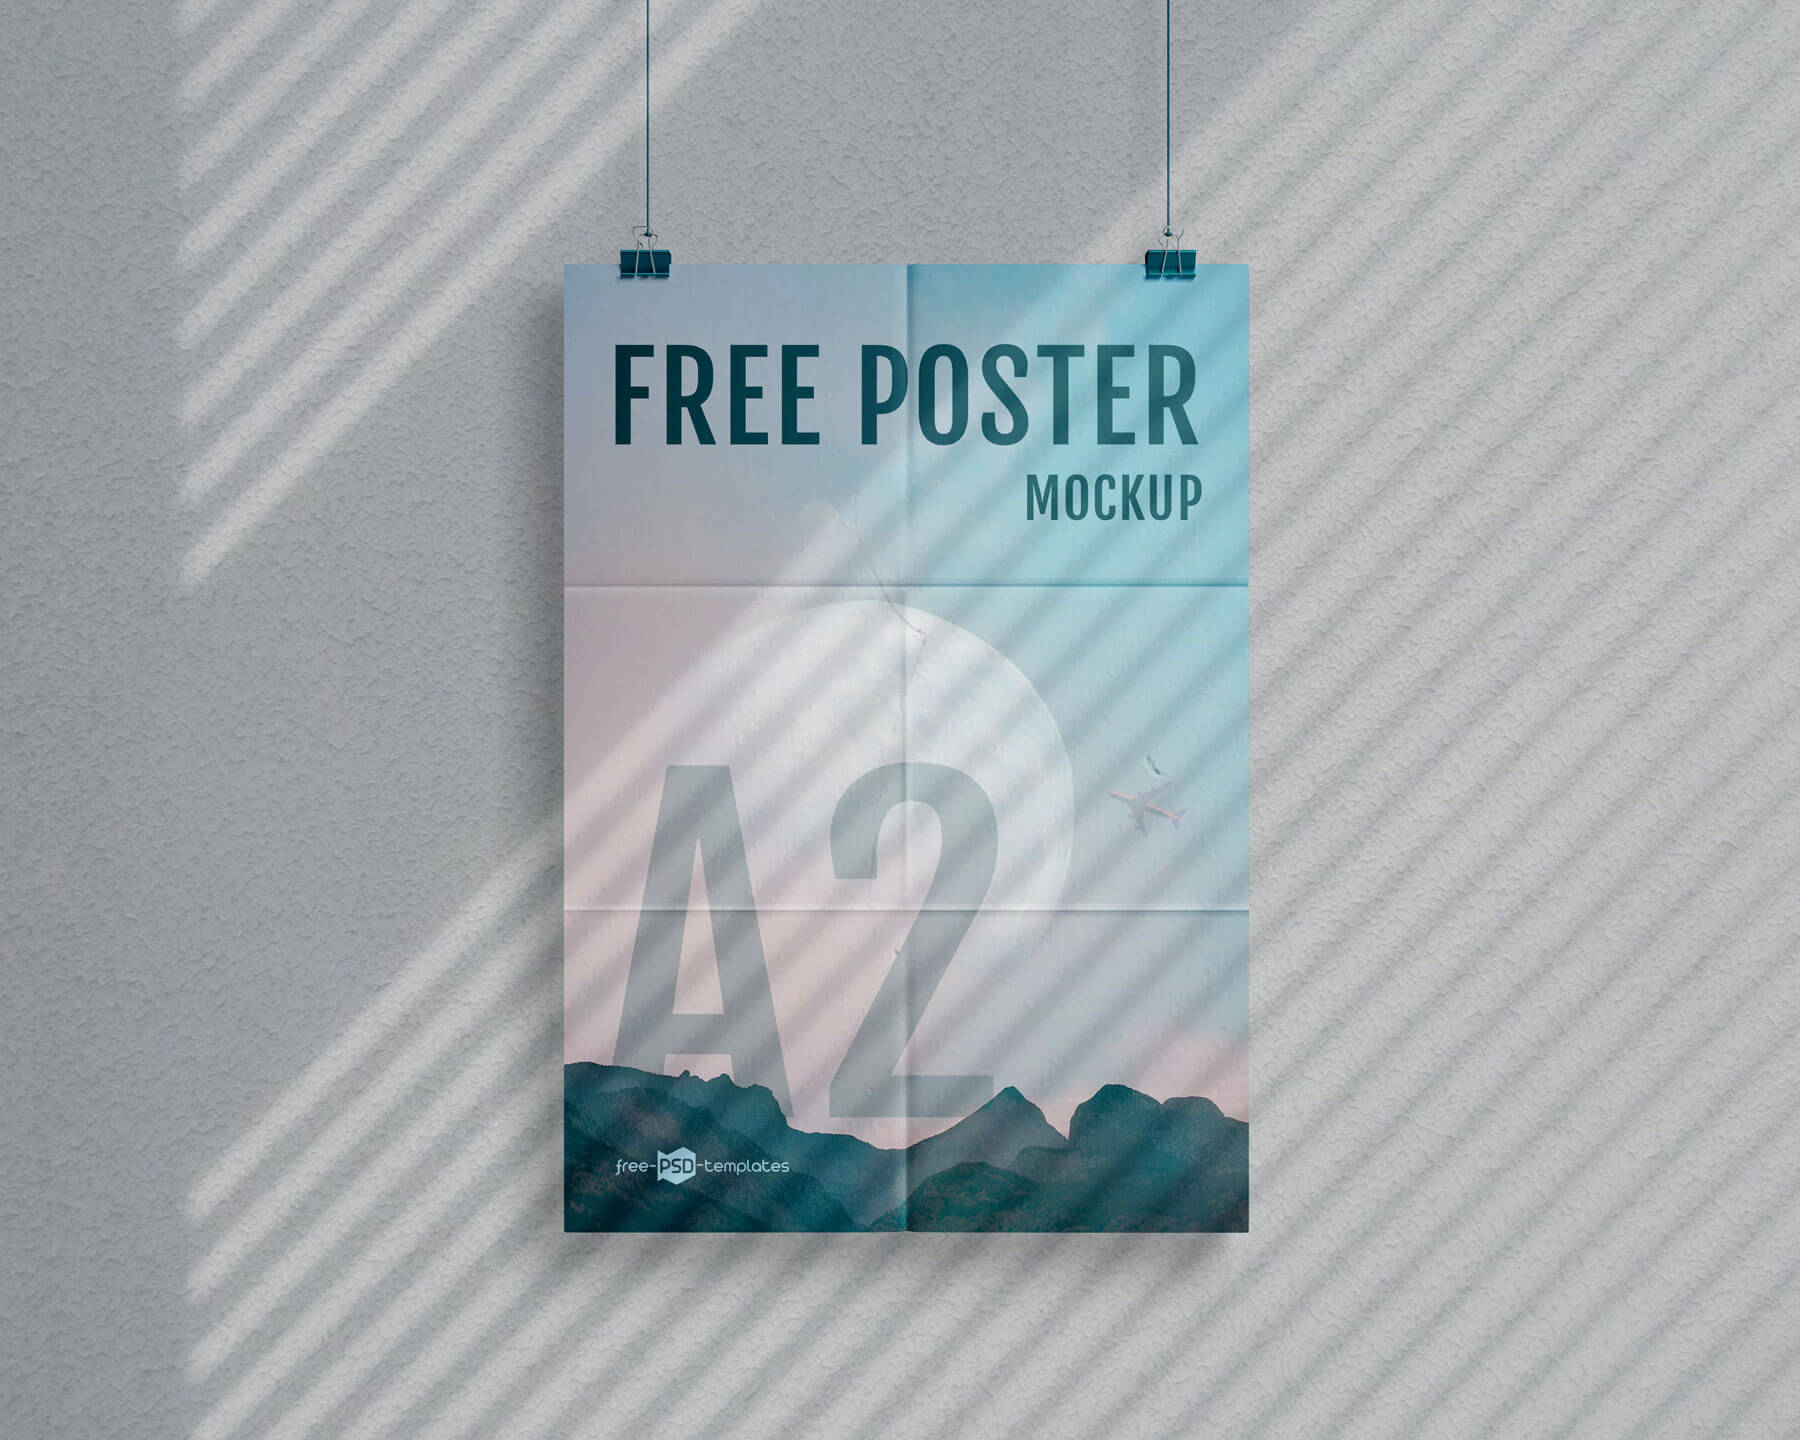 Shadow overlay Free Hanging Posters Mockup PSD Set